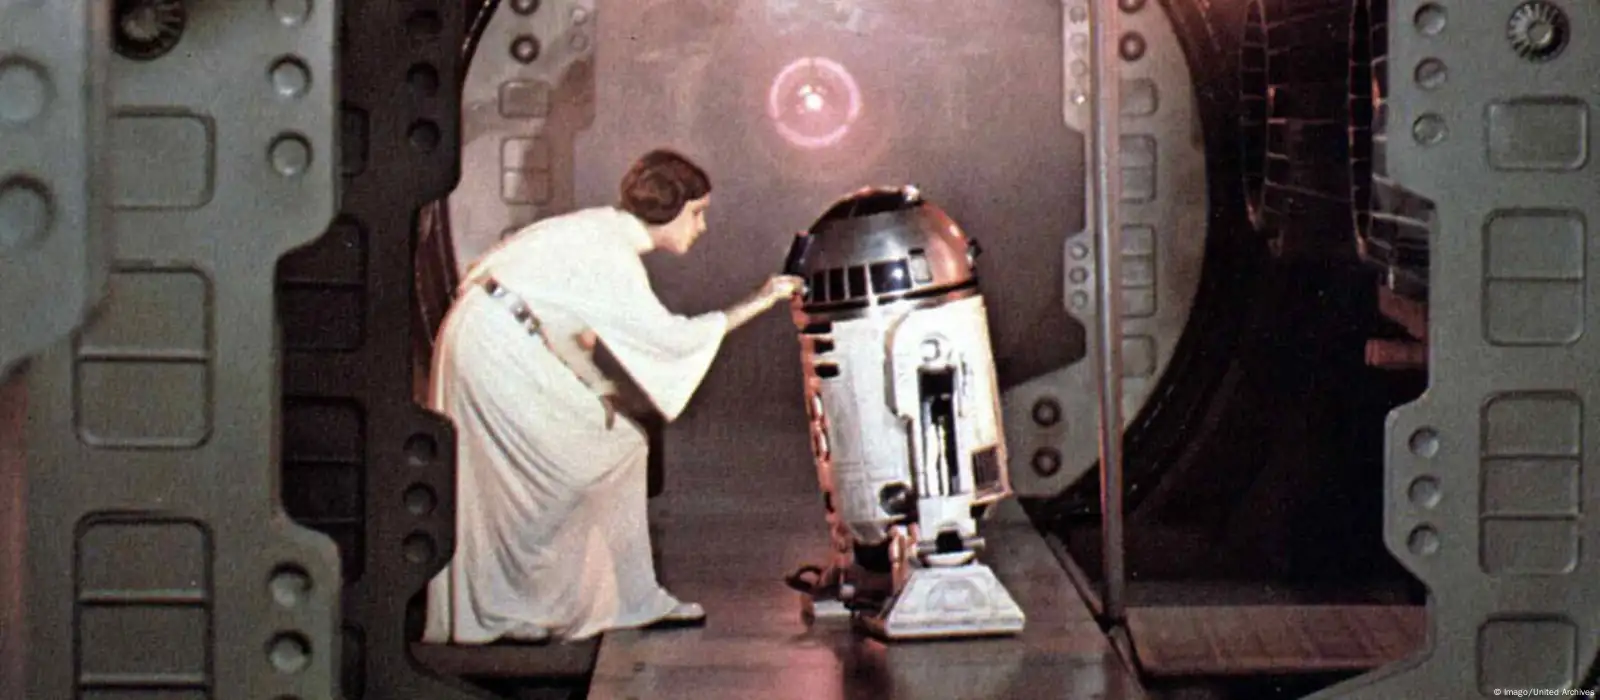 R2-D2 Star Wars droid fetches $2.78 million